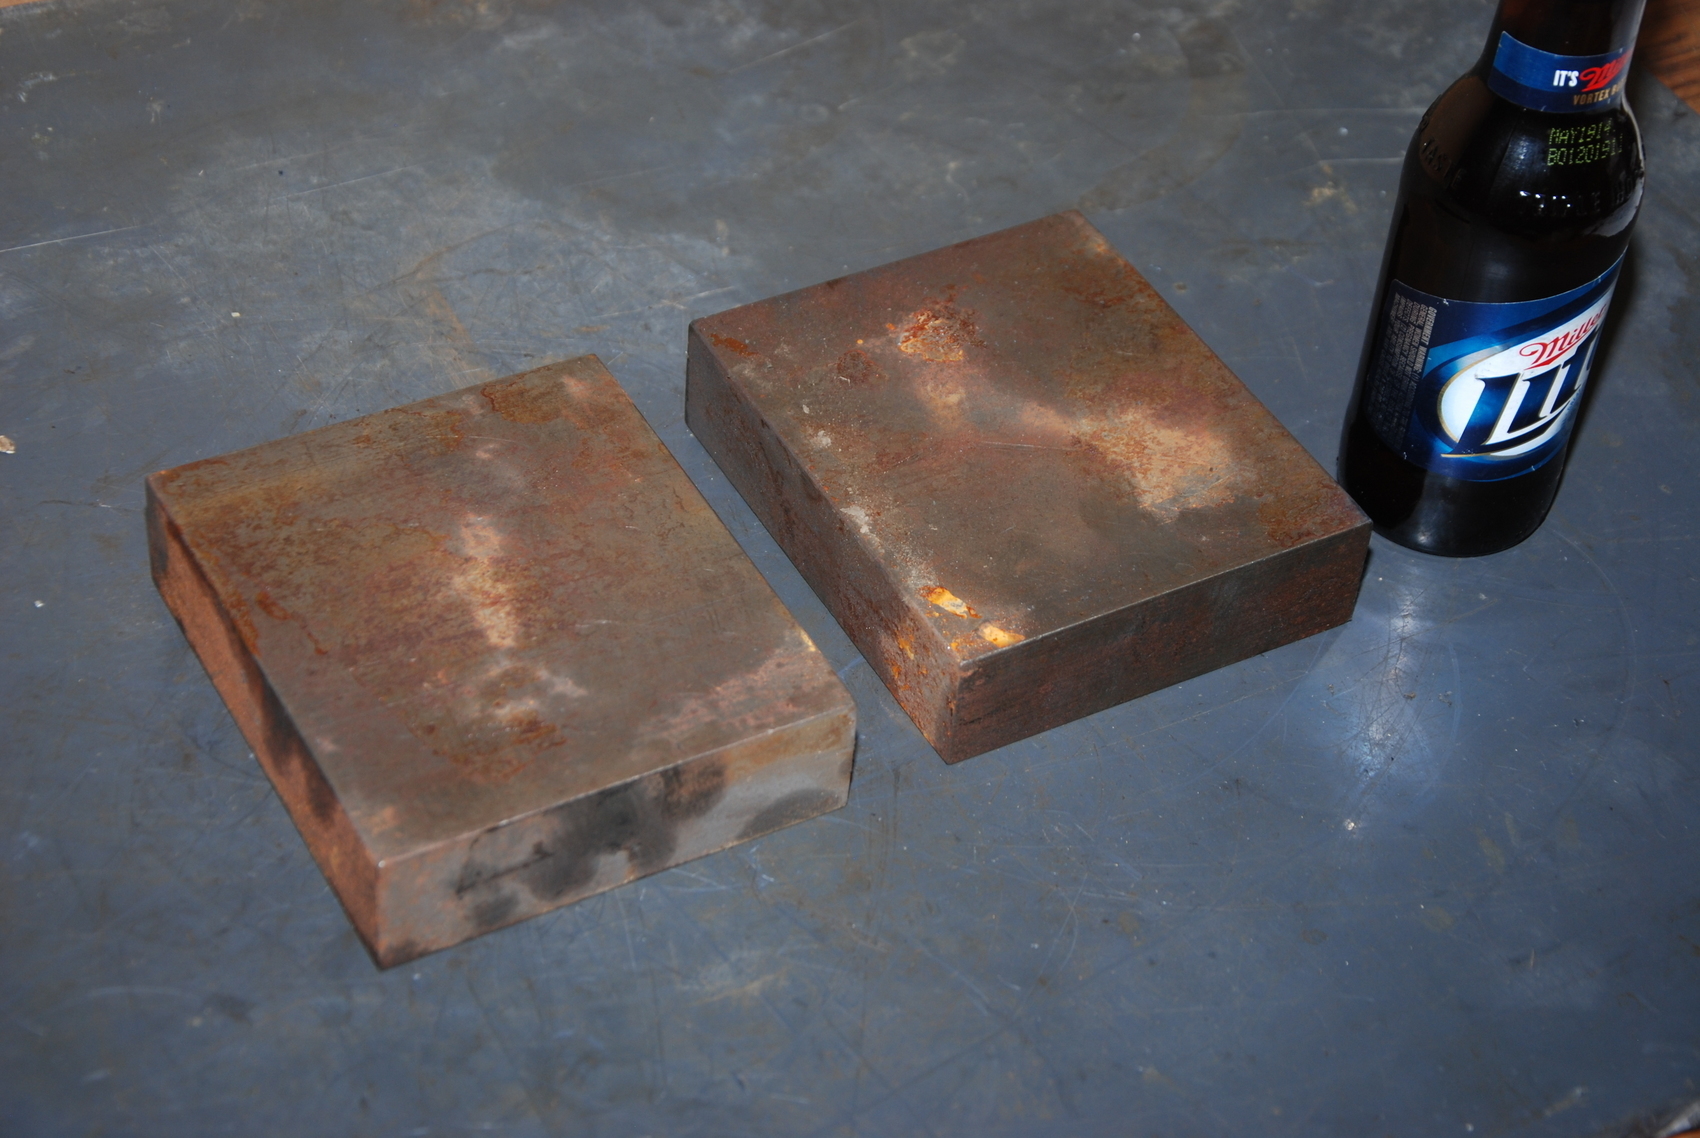 Lot of 2 steel Rectangular Bar for blacksmith anvil,26 lbs